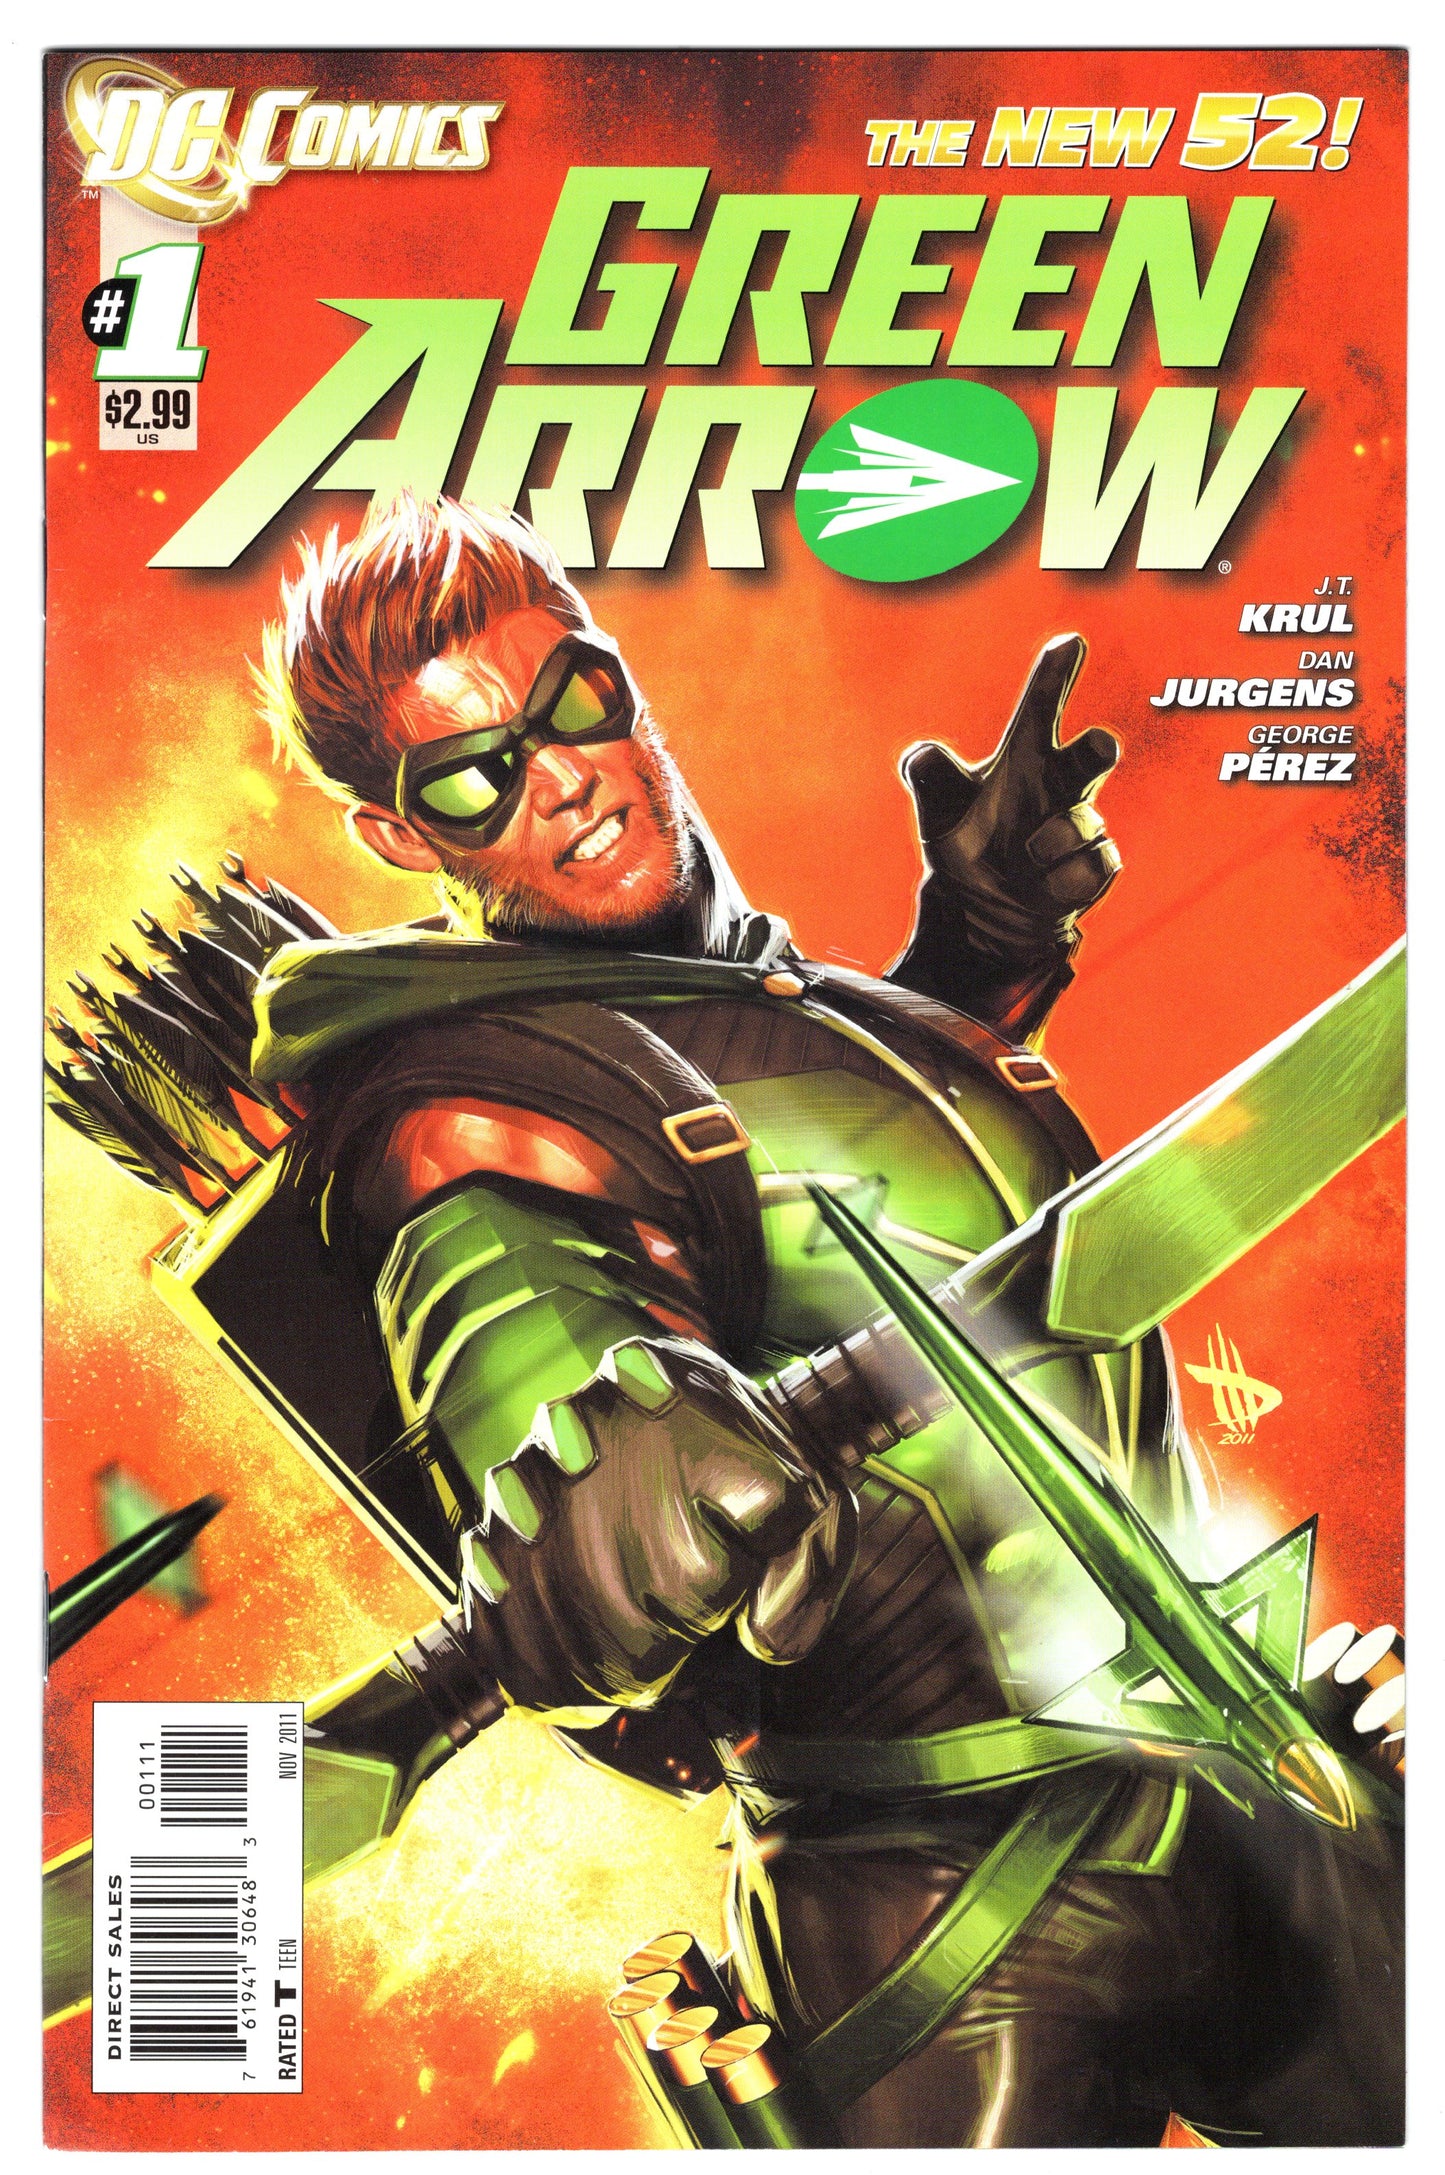 Green Arrow The New 52! - Issue #1 (Nov. 2011) VF/NM